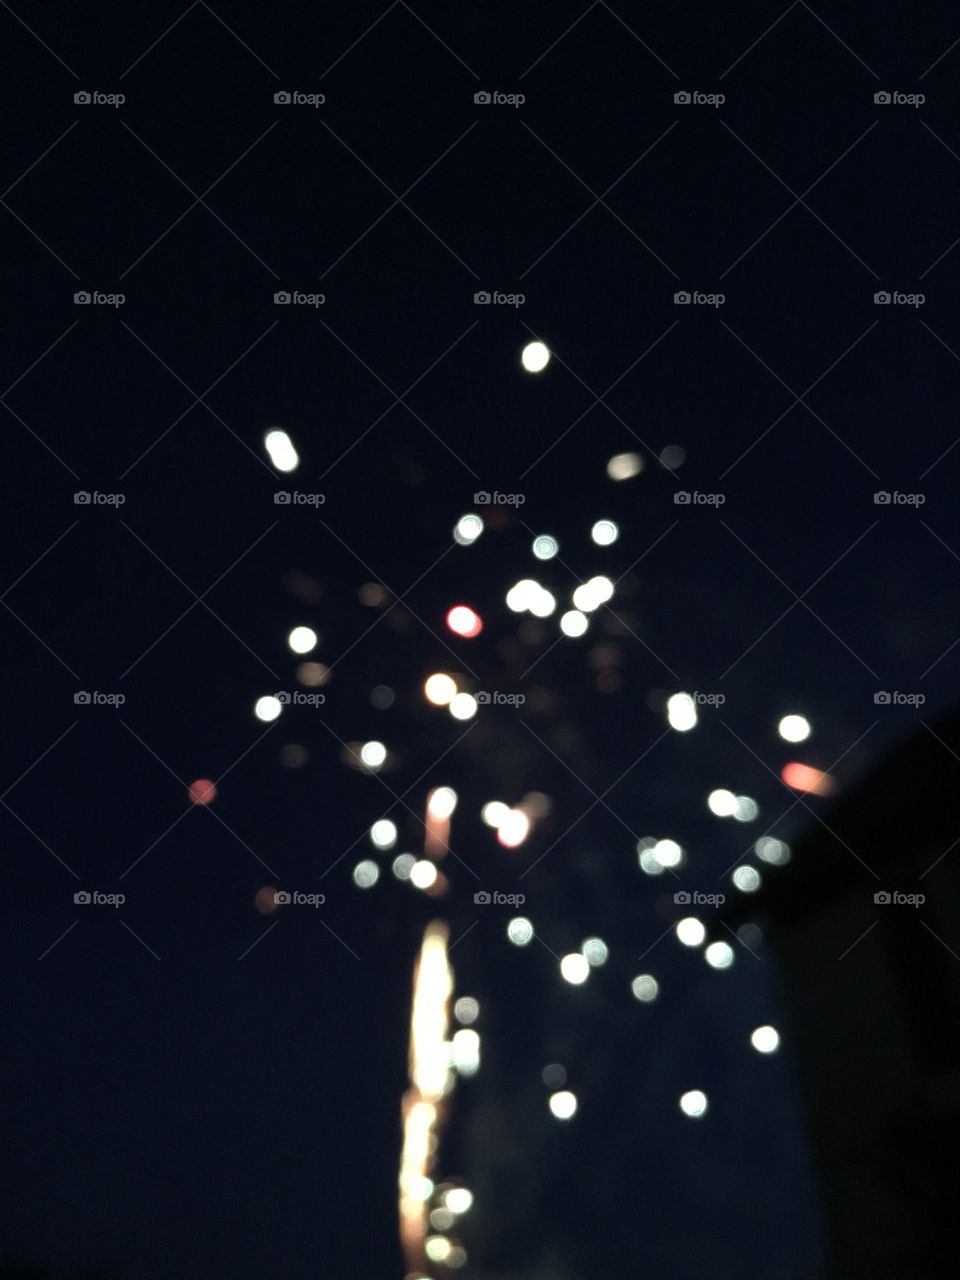 Fireworks 